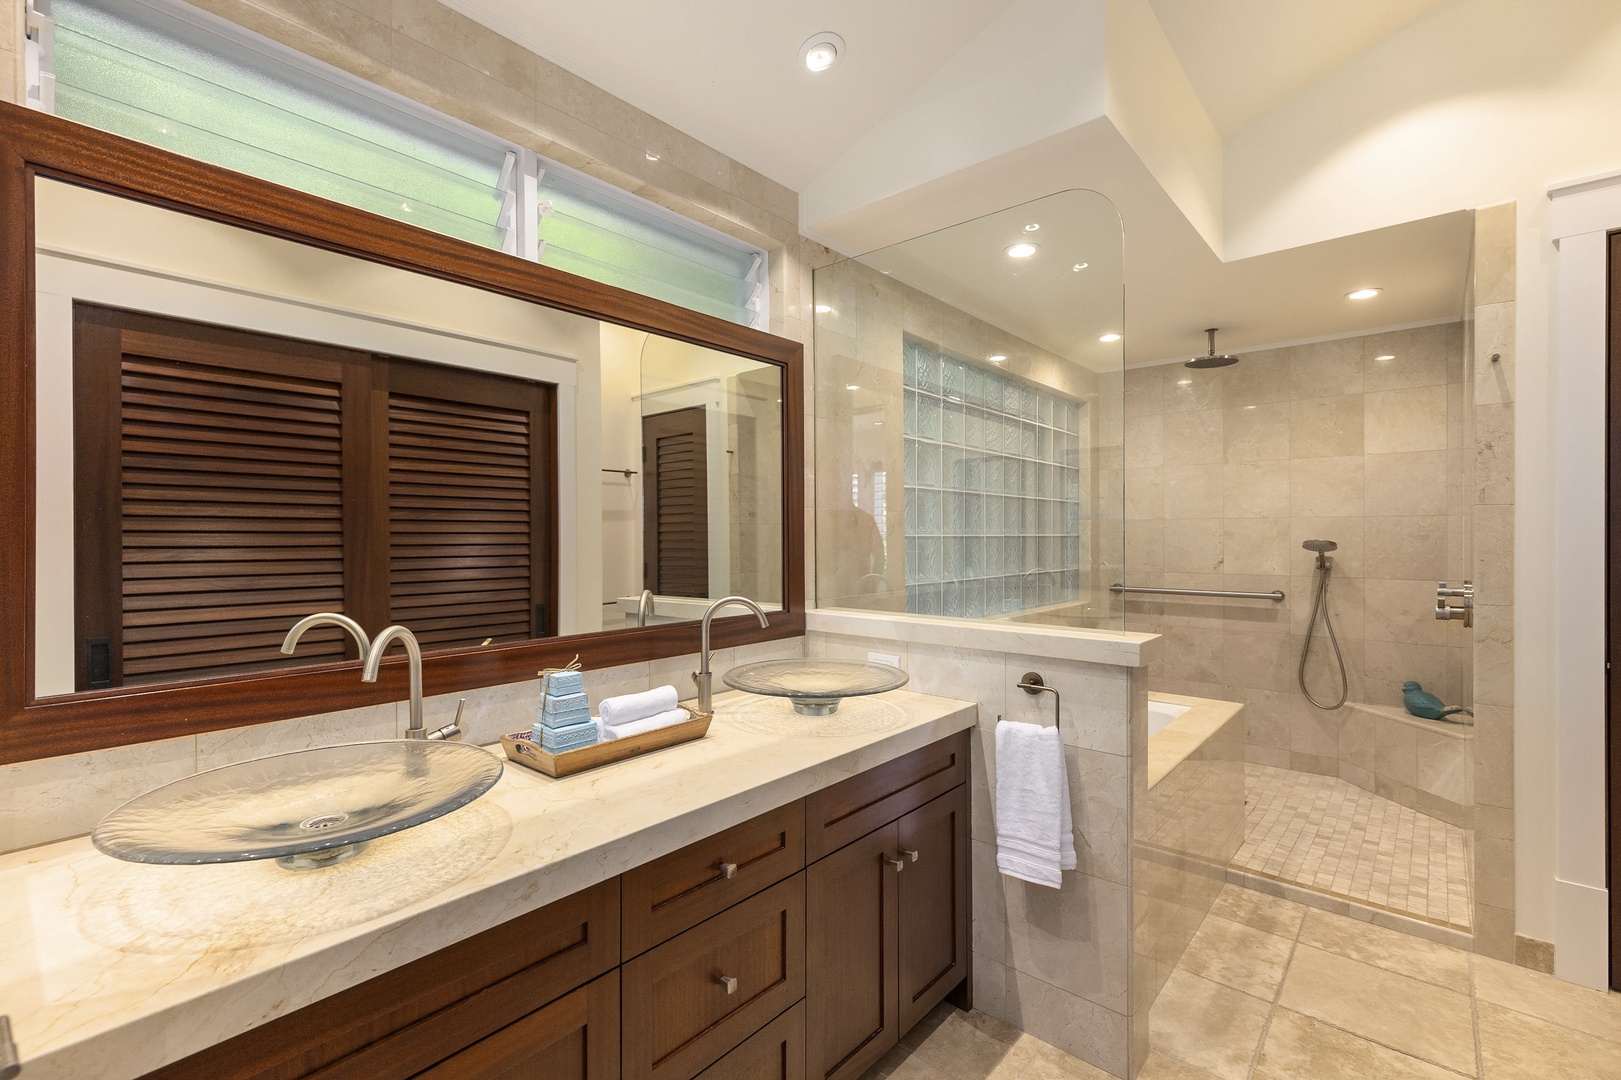 Kailua Vacation Rentals, Lanikai Villa* - Guest Bedroom 2 ensuite with dual vanity, soaking tub, and walk-in shower